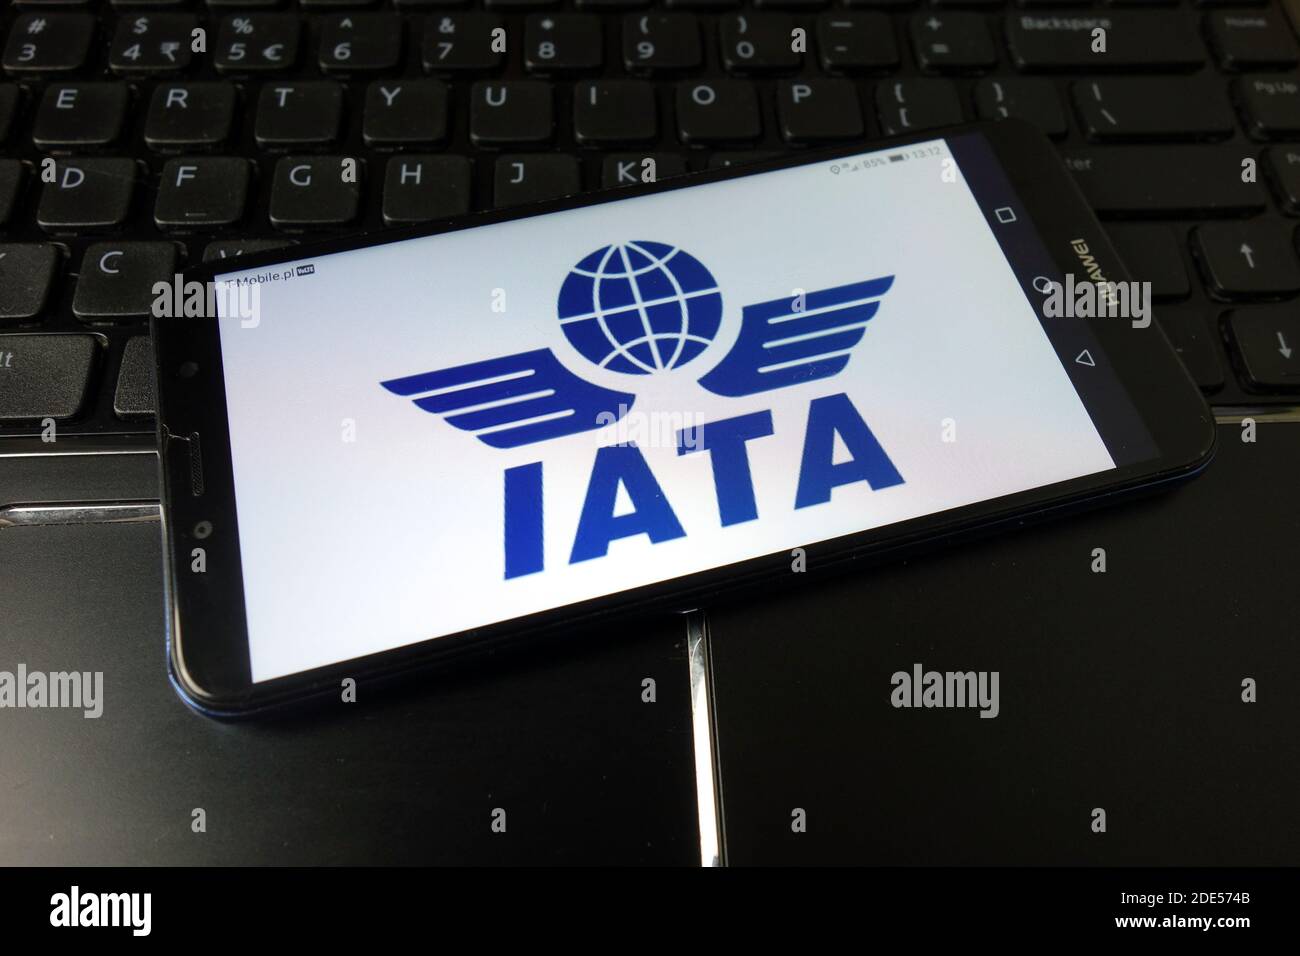 KONSKIE, POLONIA - 11 gennaio 2020: Logo IATA dell'International Air Transport Association visualizzato sul telefono cellulare Foto Stock